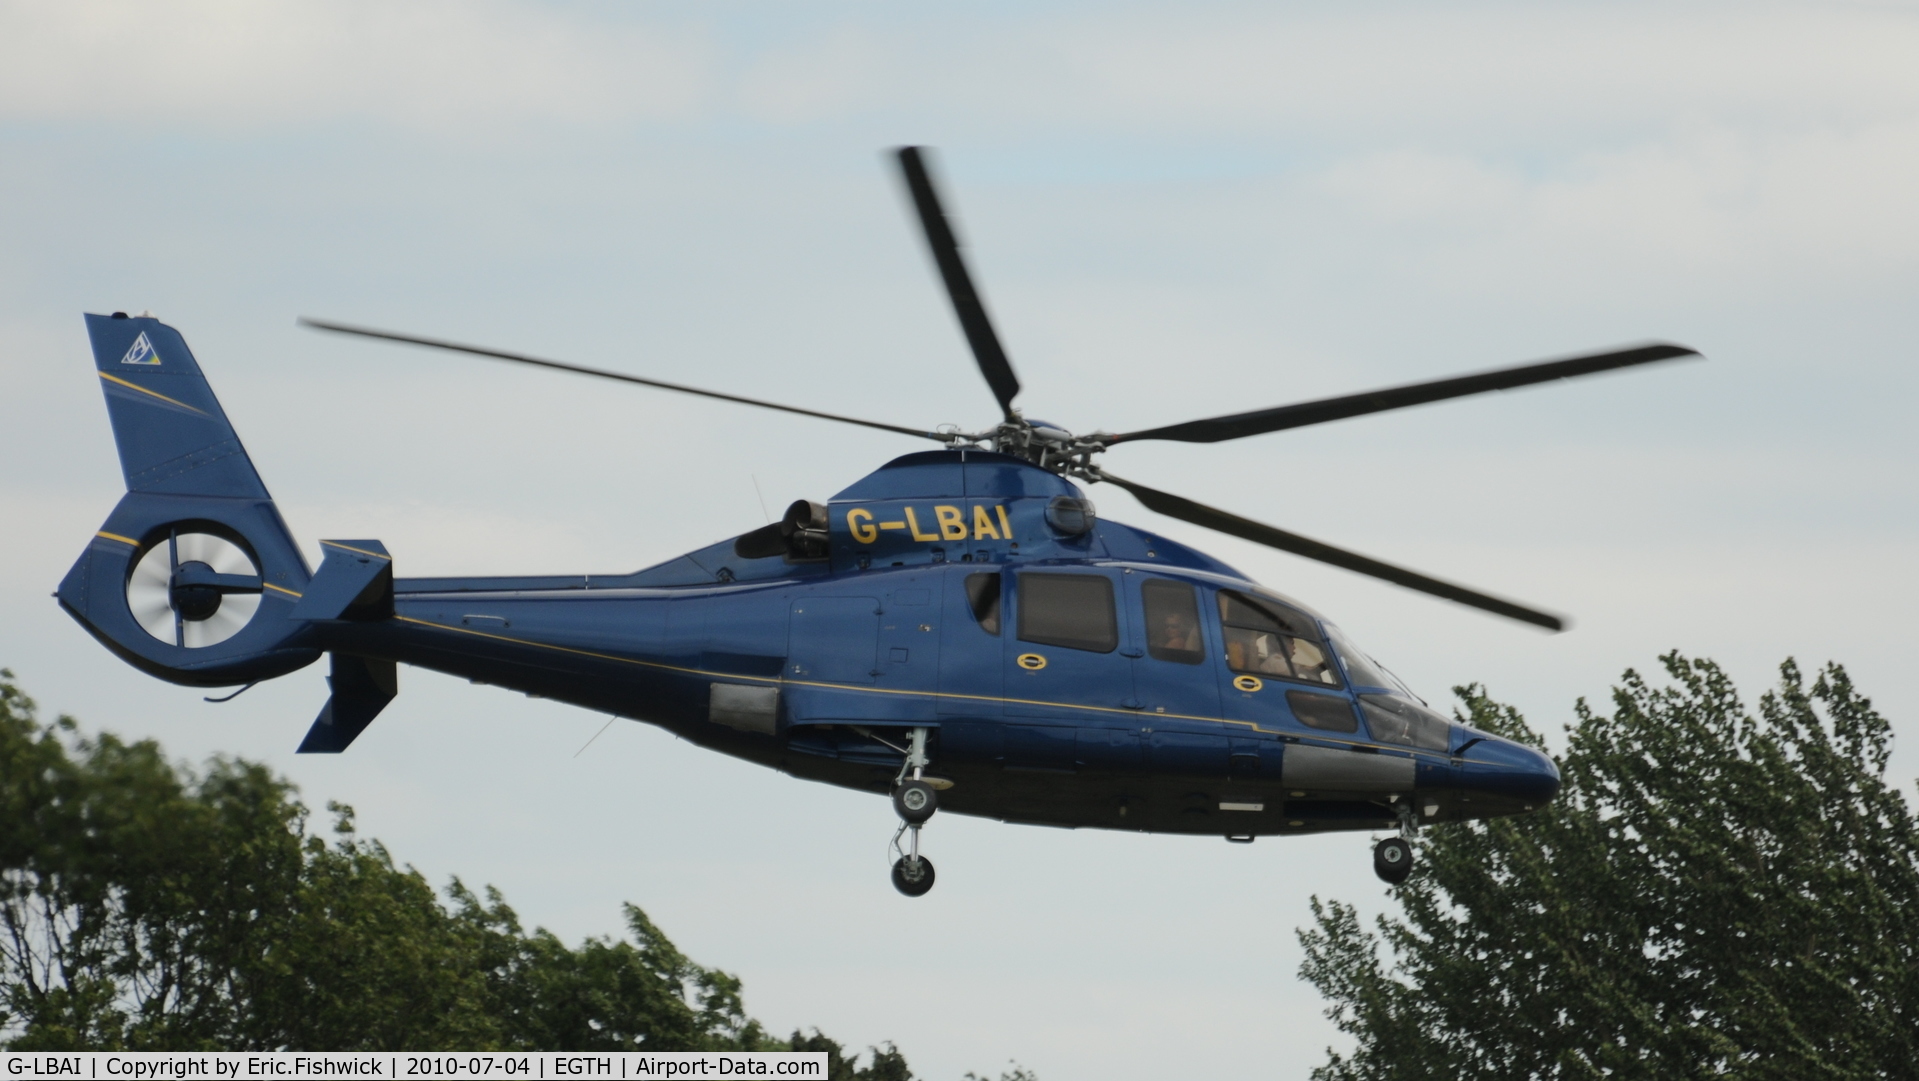 G-LBAI, 2003 Eurocopter EC-155B-1 C/N 6652, G-LBAI departing Shuttleworth American Air Display 4th. July 2010